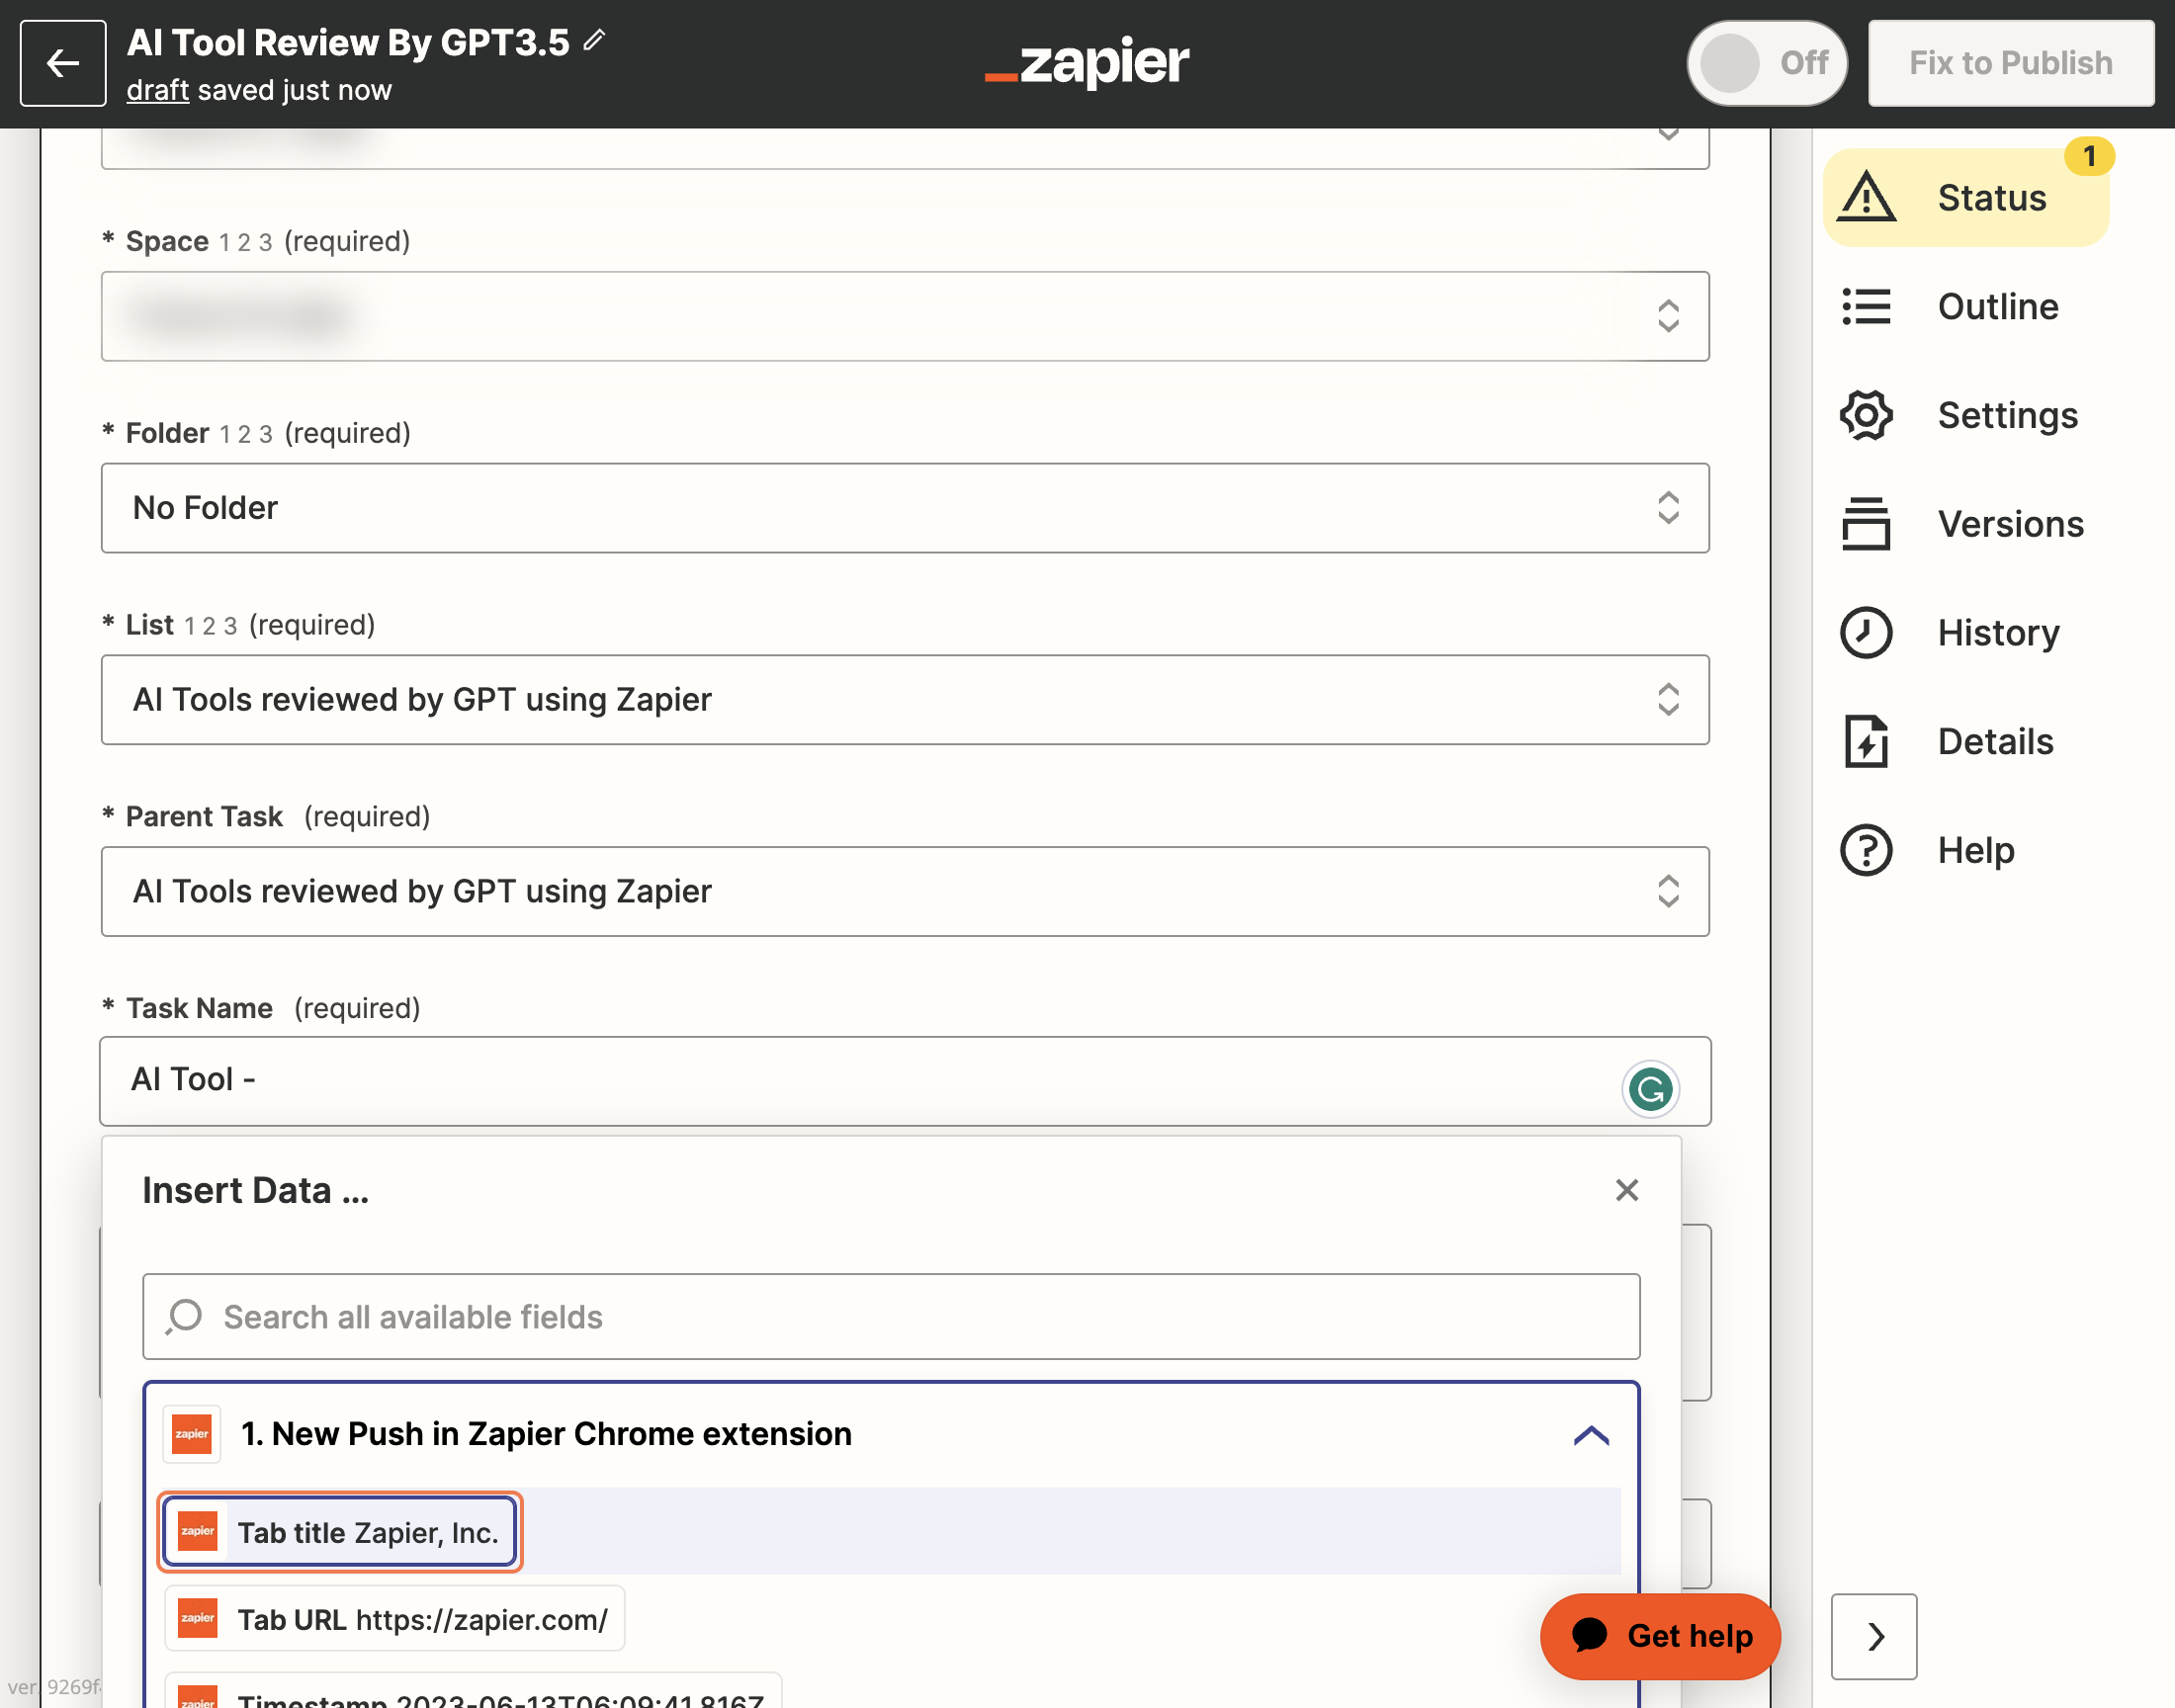 Click on Tab title Zapier, Inc.